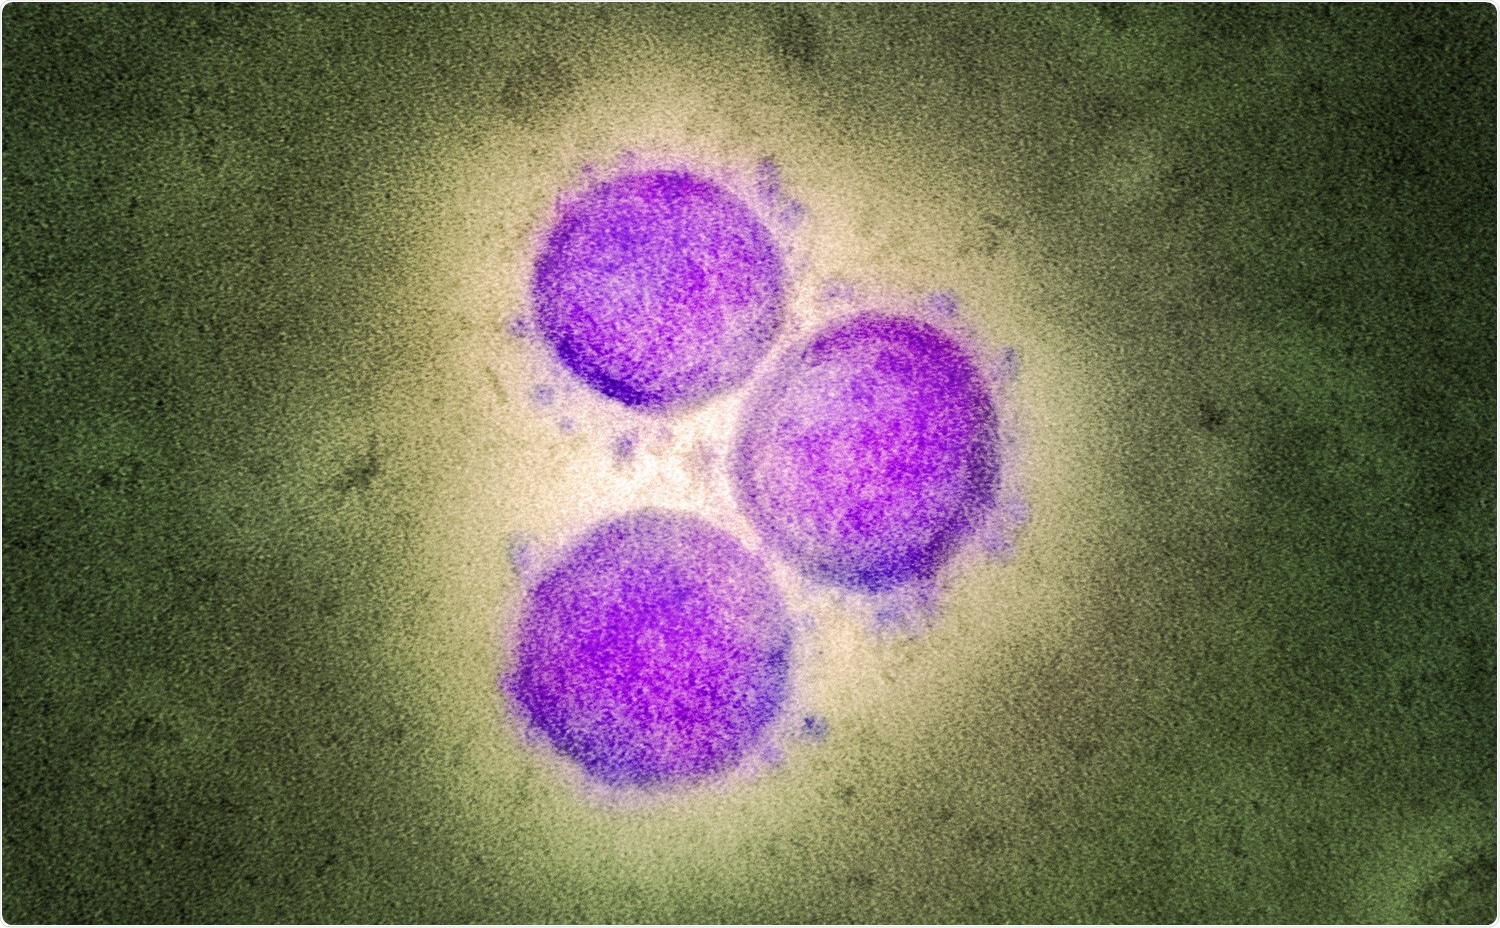 Transmission electron micrograph of SARS-CoV-2 virus particles. Image Credit: NIAID